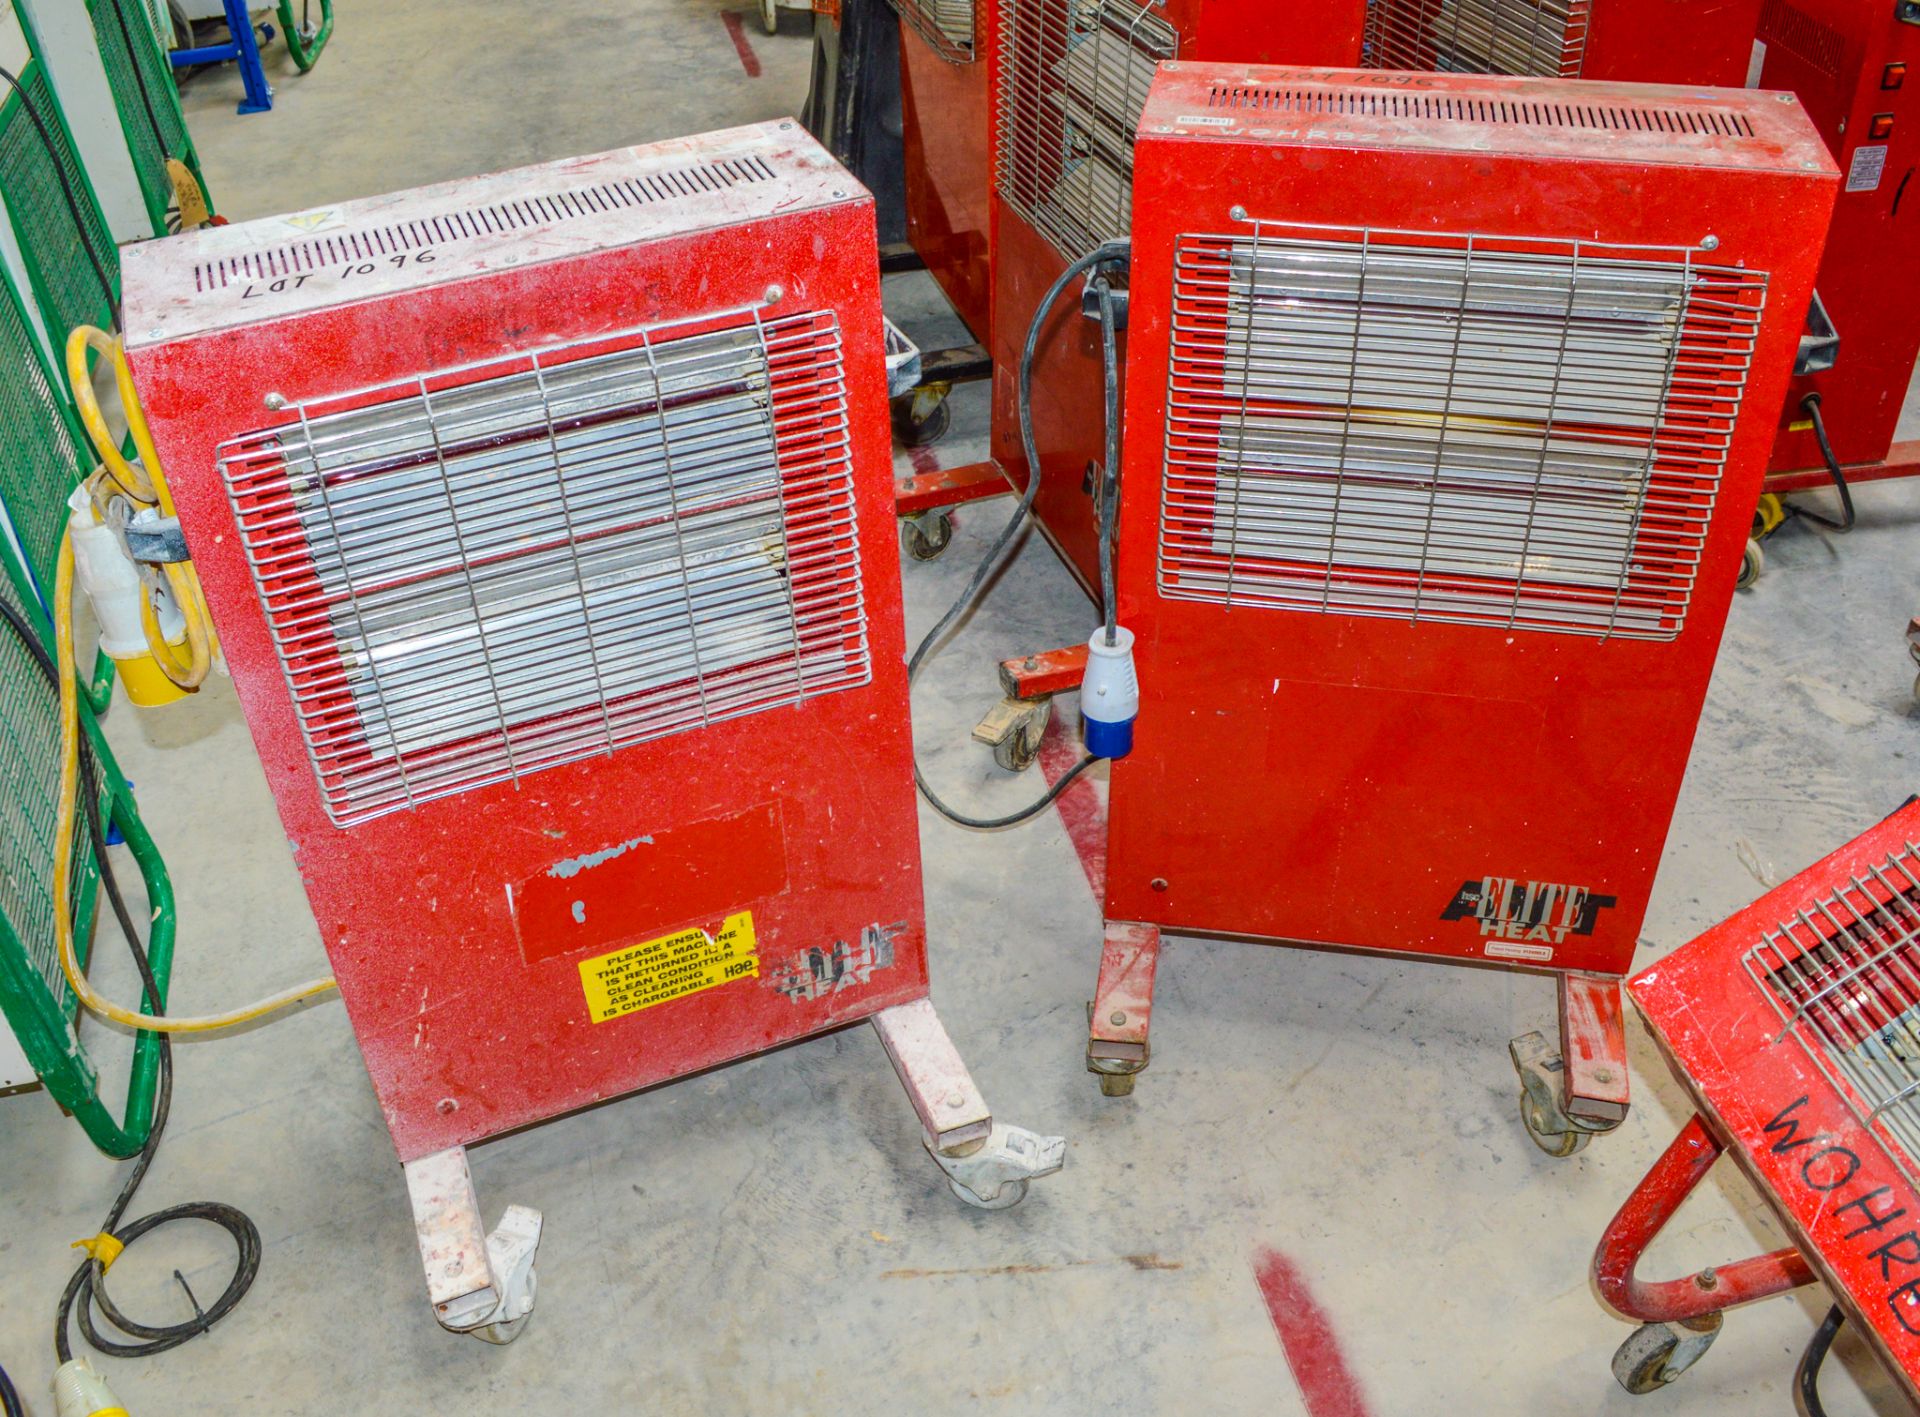 2 - Infra red heaters 1 - 110v & 1 - 240v WOHRB219/1824-0485 ** 1 with tube missing **